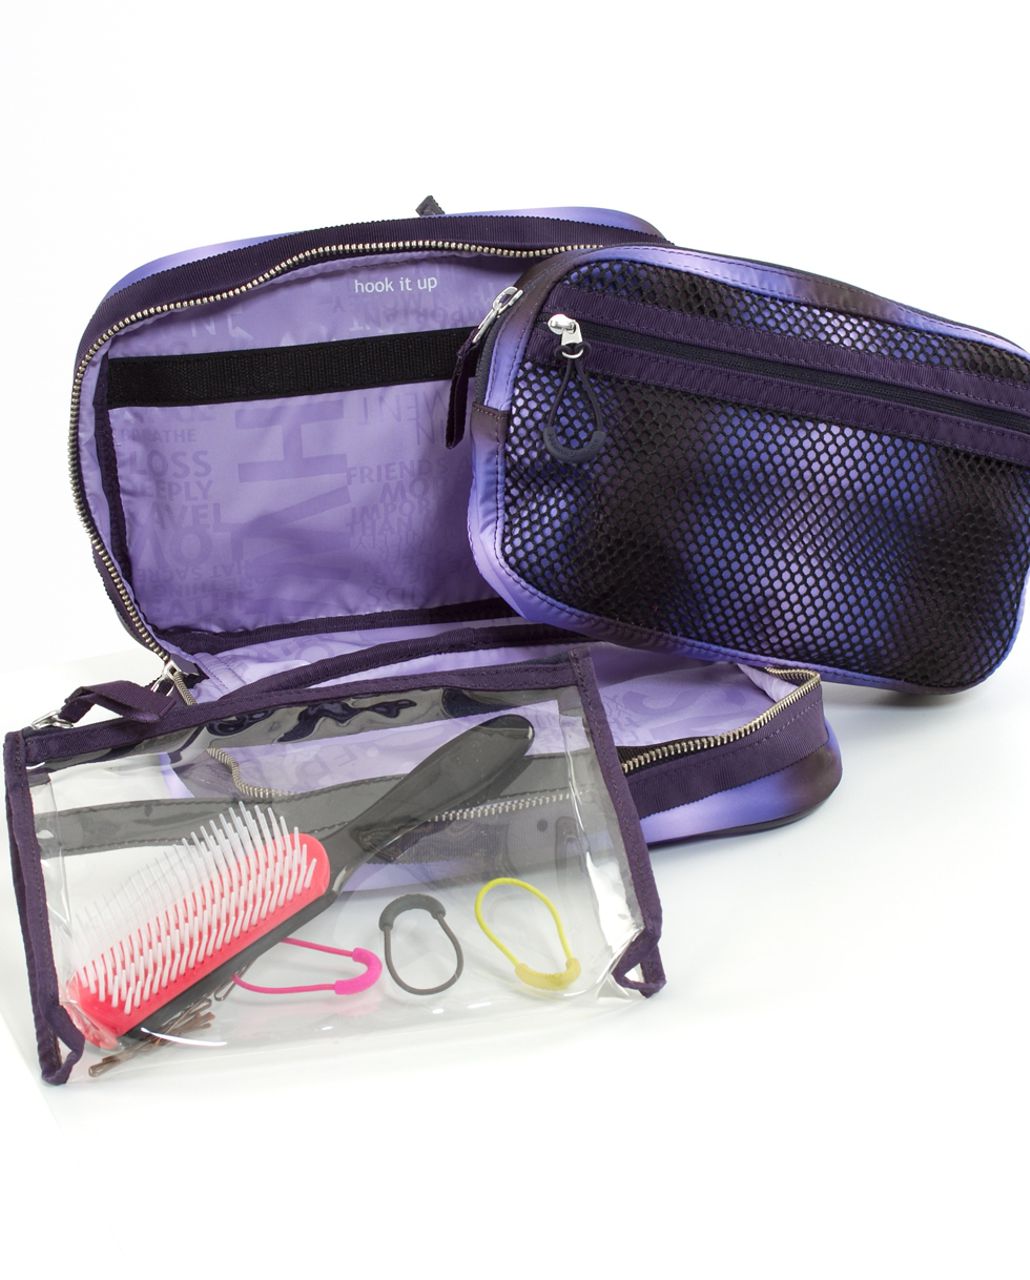 lululemon gym essential kit - lululemon wallets and small bags